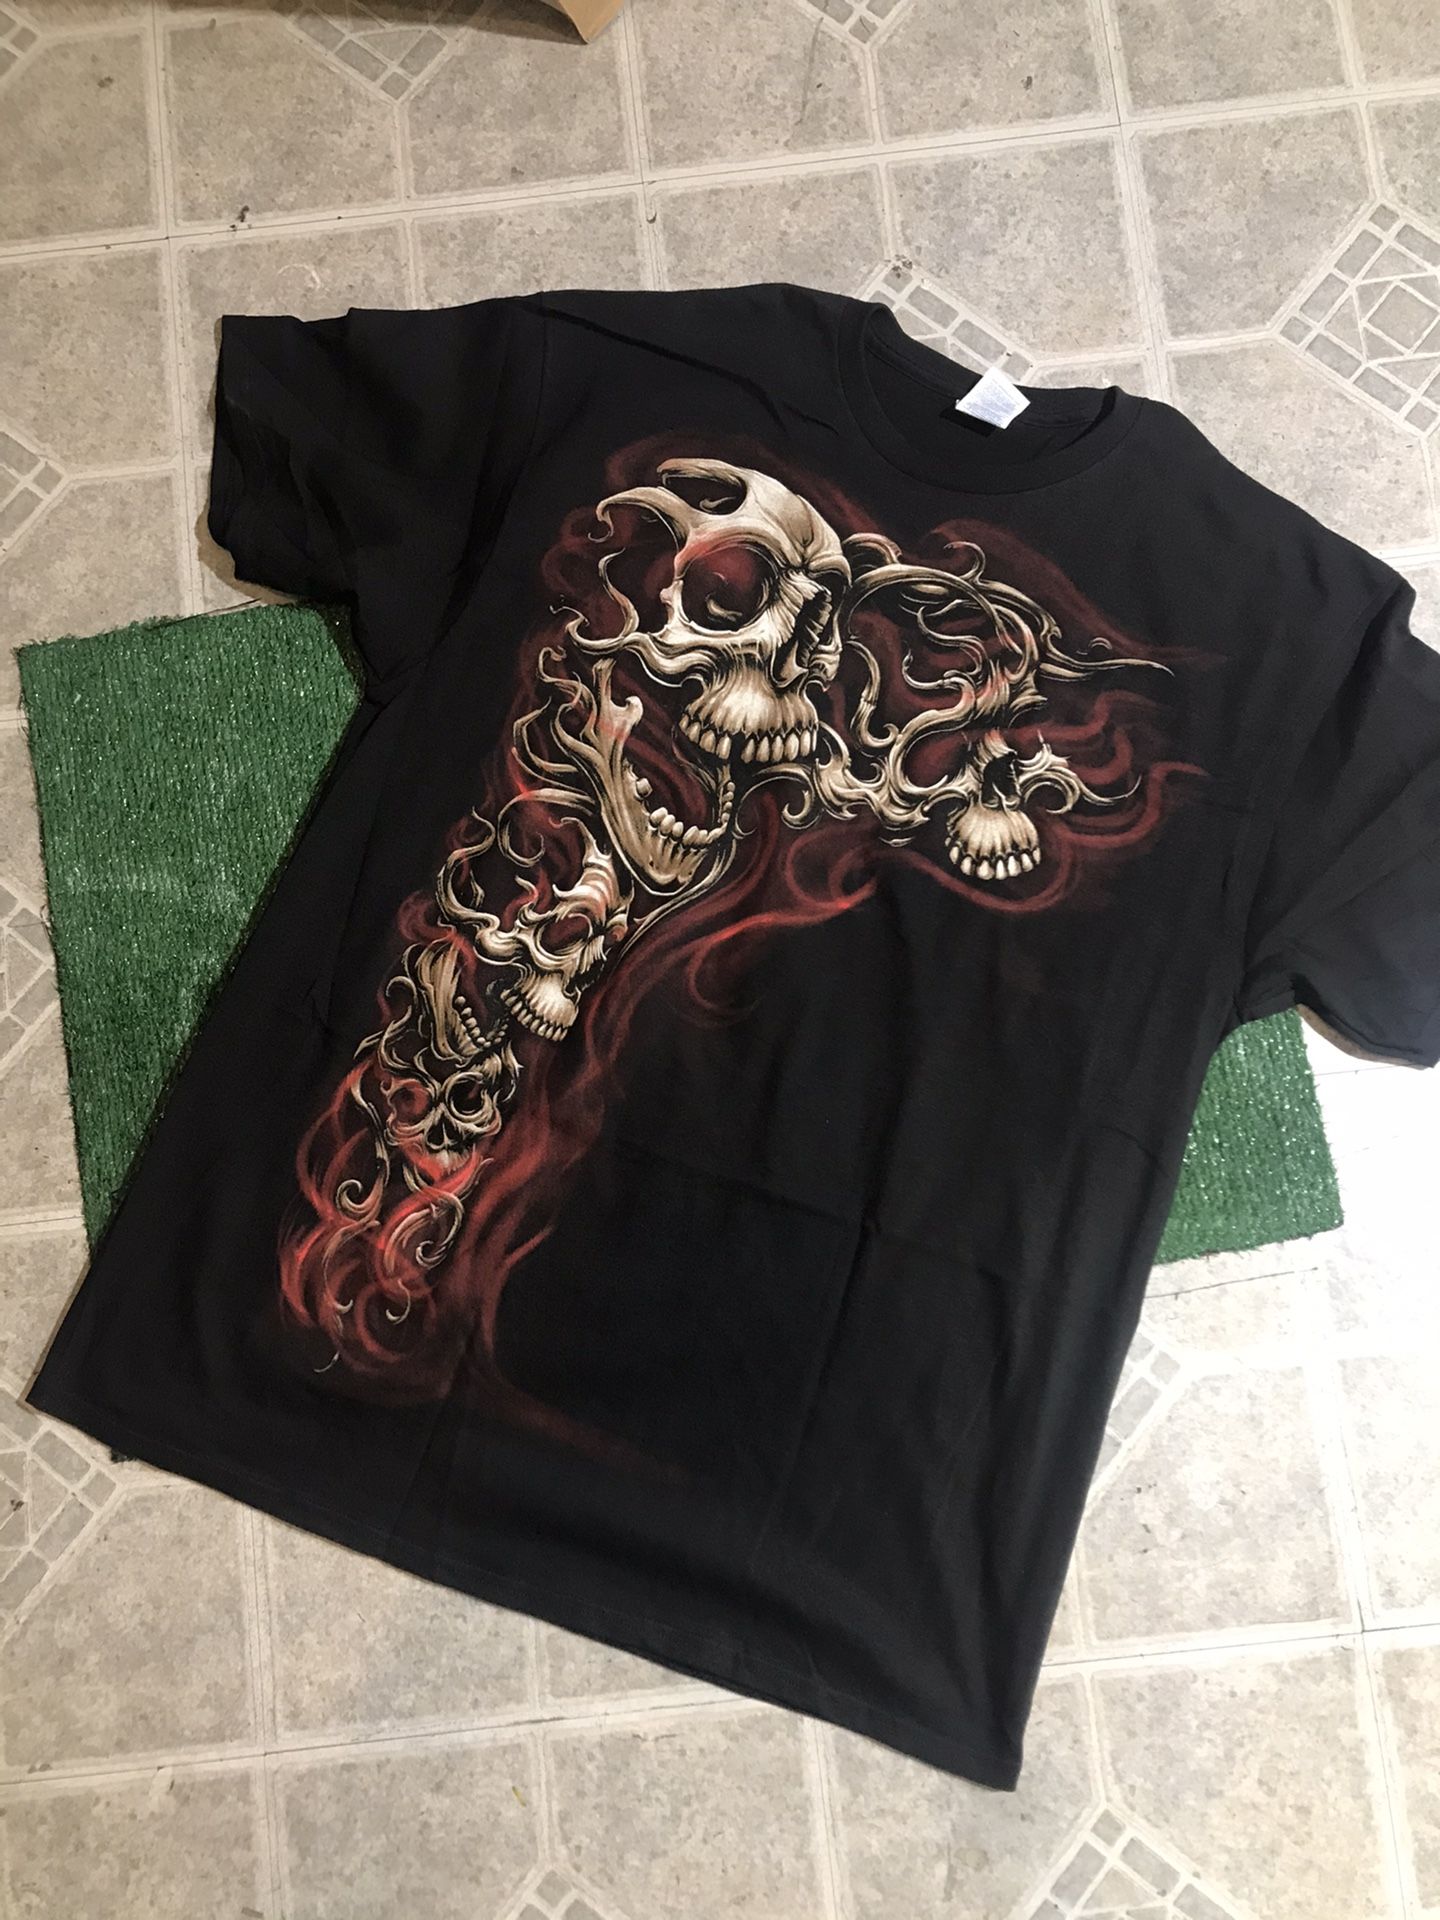 Skull/Fire T-shirt